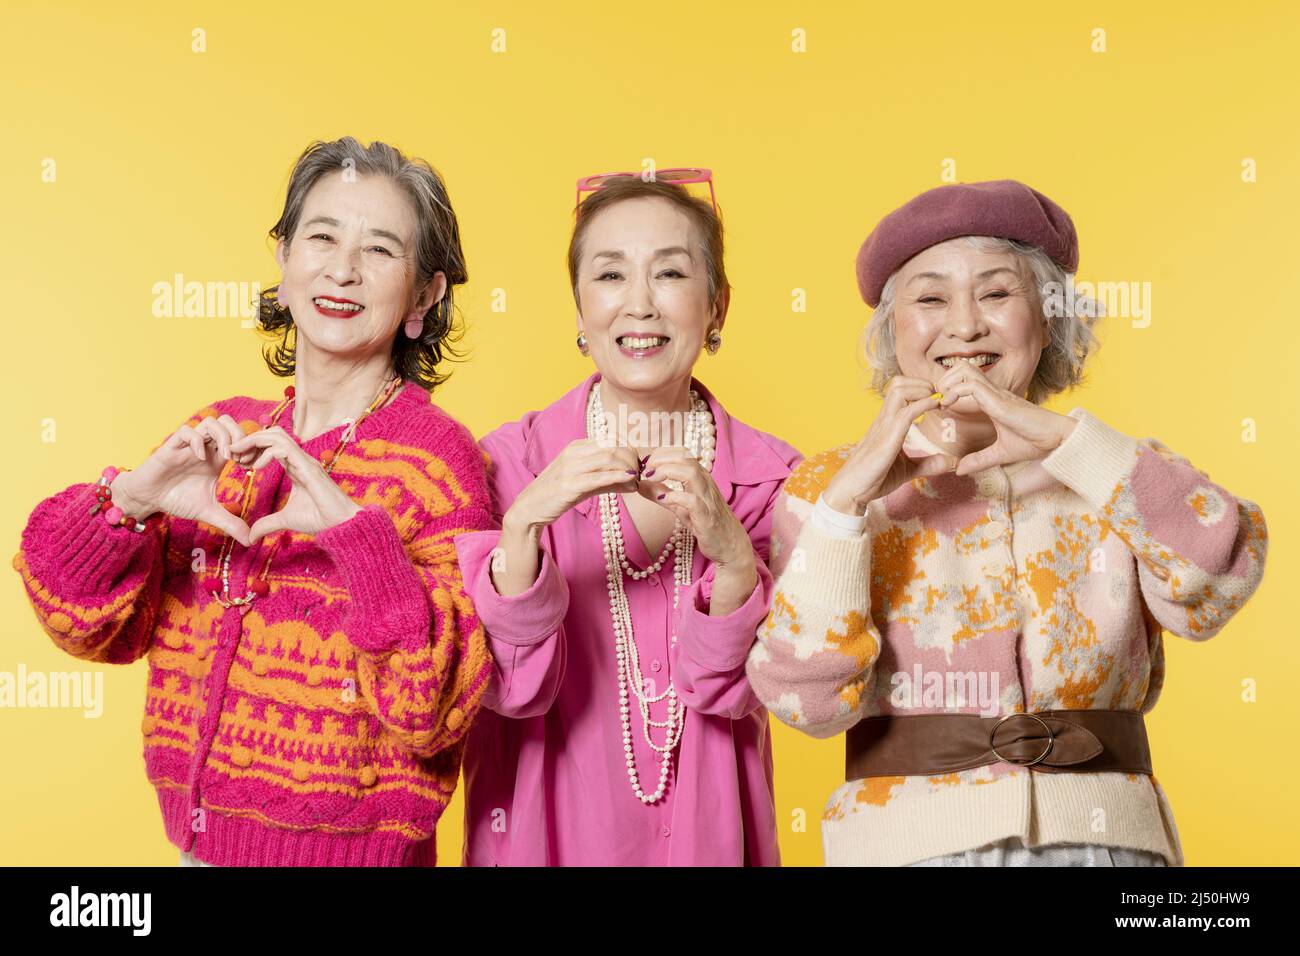 Elderly Women Fashion Portrait Stock Photo